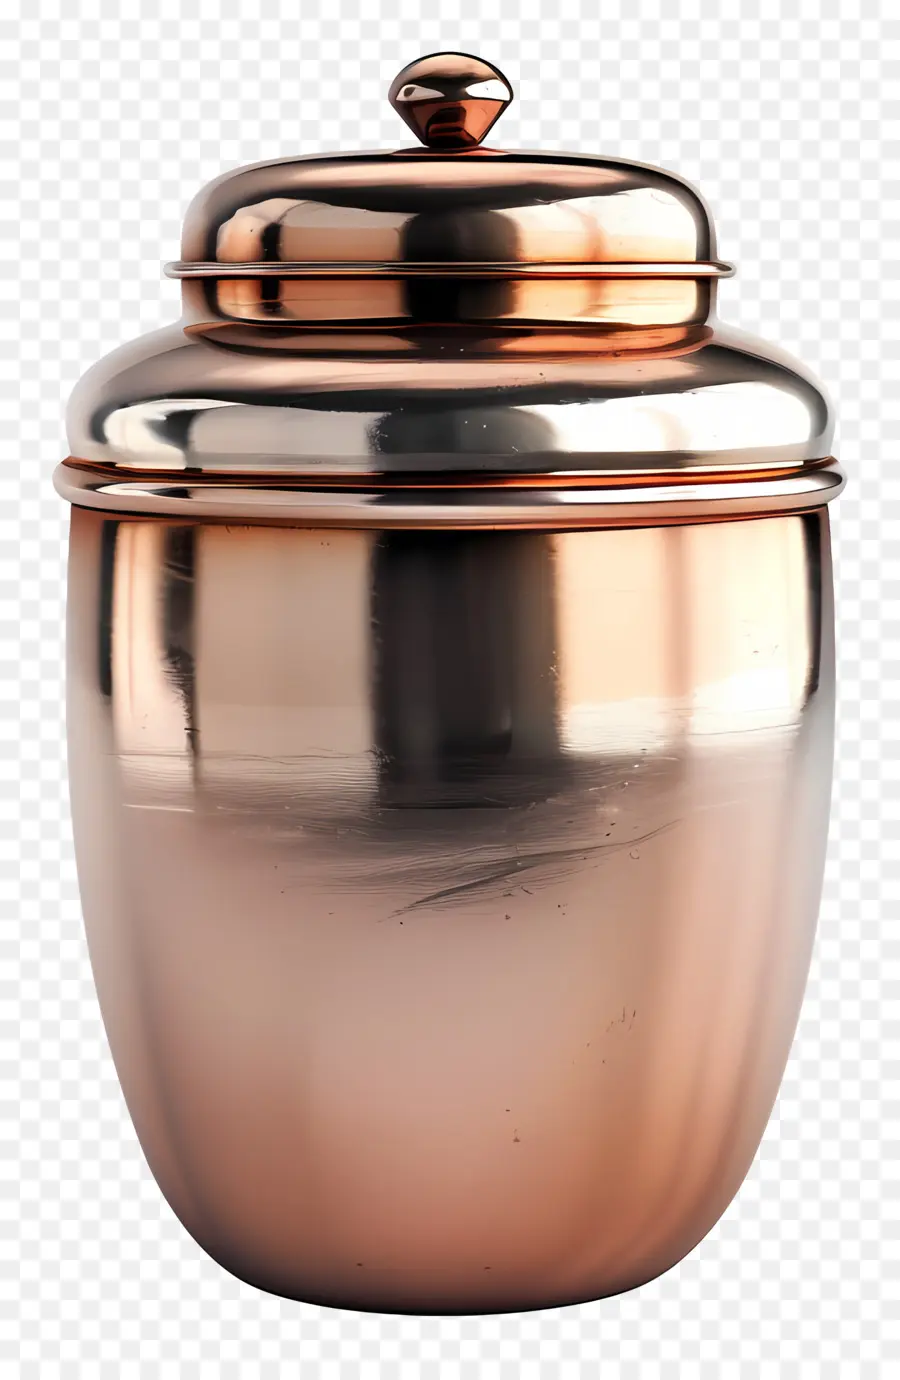 vaso in metallo vaso di rame pentole cucina in metallo pentola in metallo - Pentola di rame con manico lungo, superficie lucida